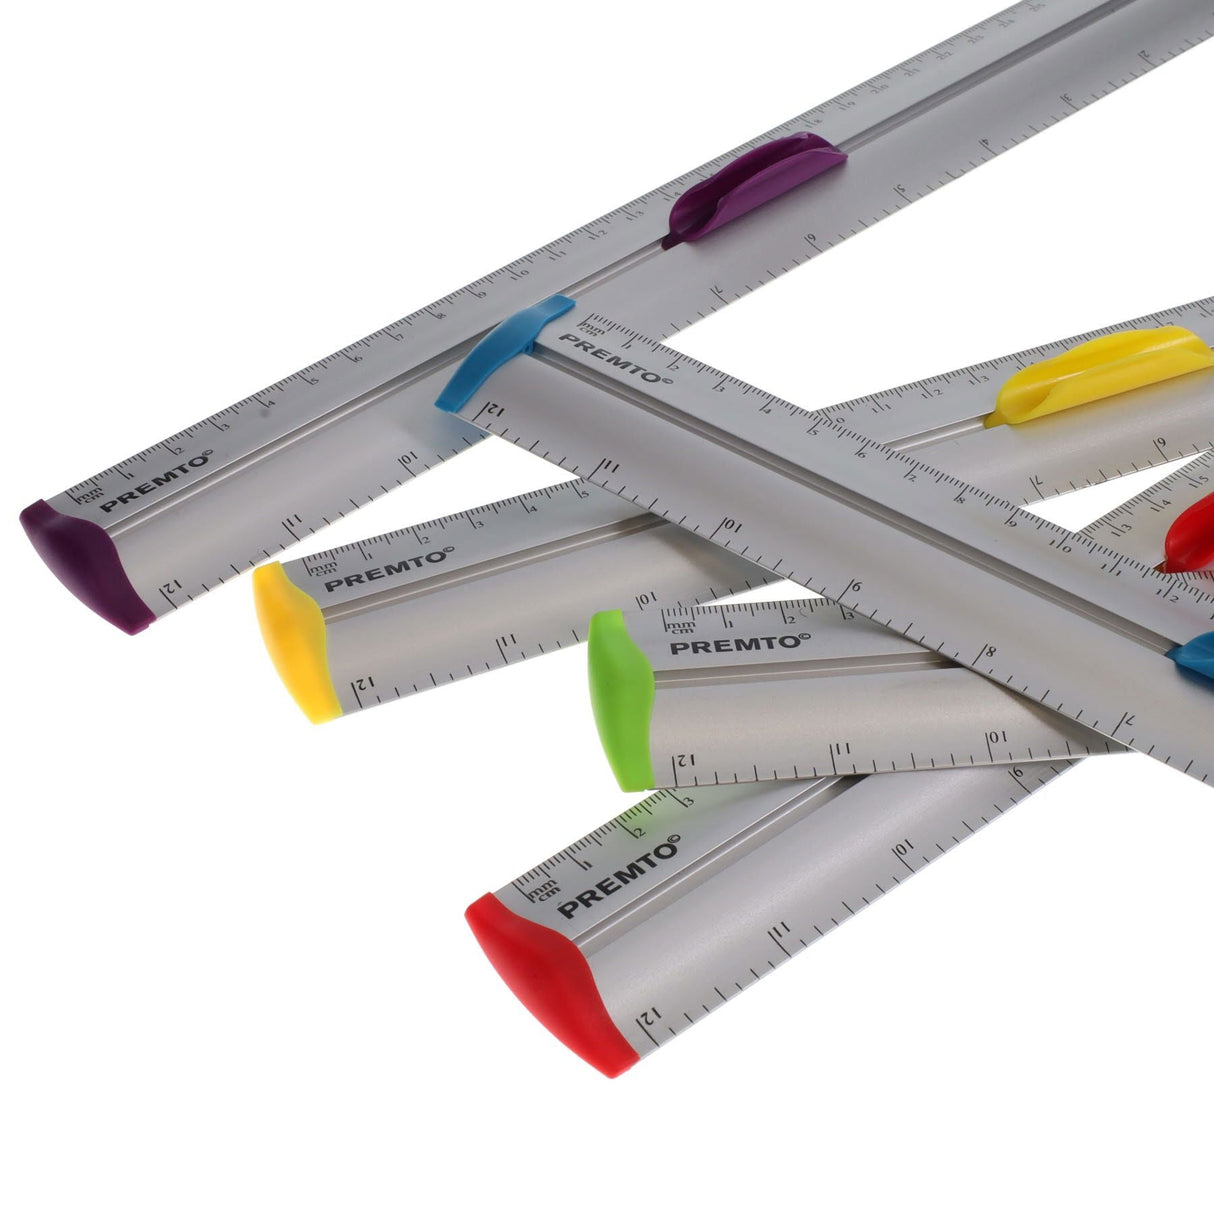 Premto S1 Aluminum Ruler With Grip 30cm - Grape Juice-Rulers-Premto|StationeryShop.co.uk